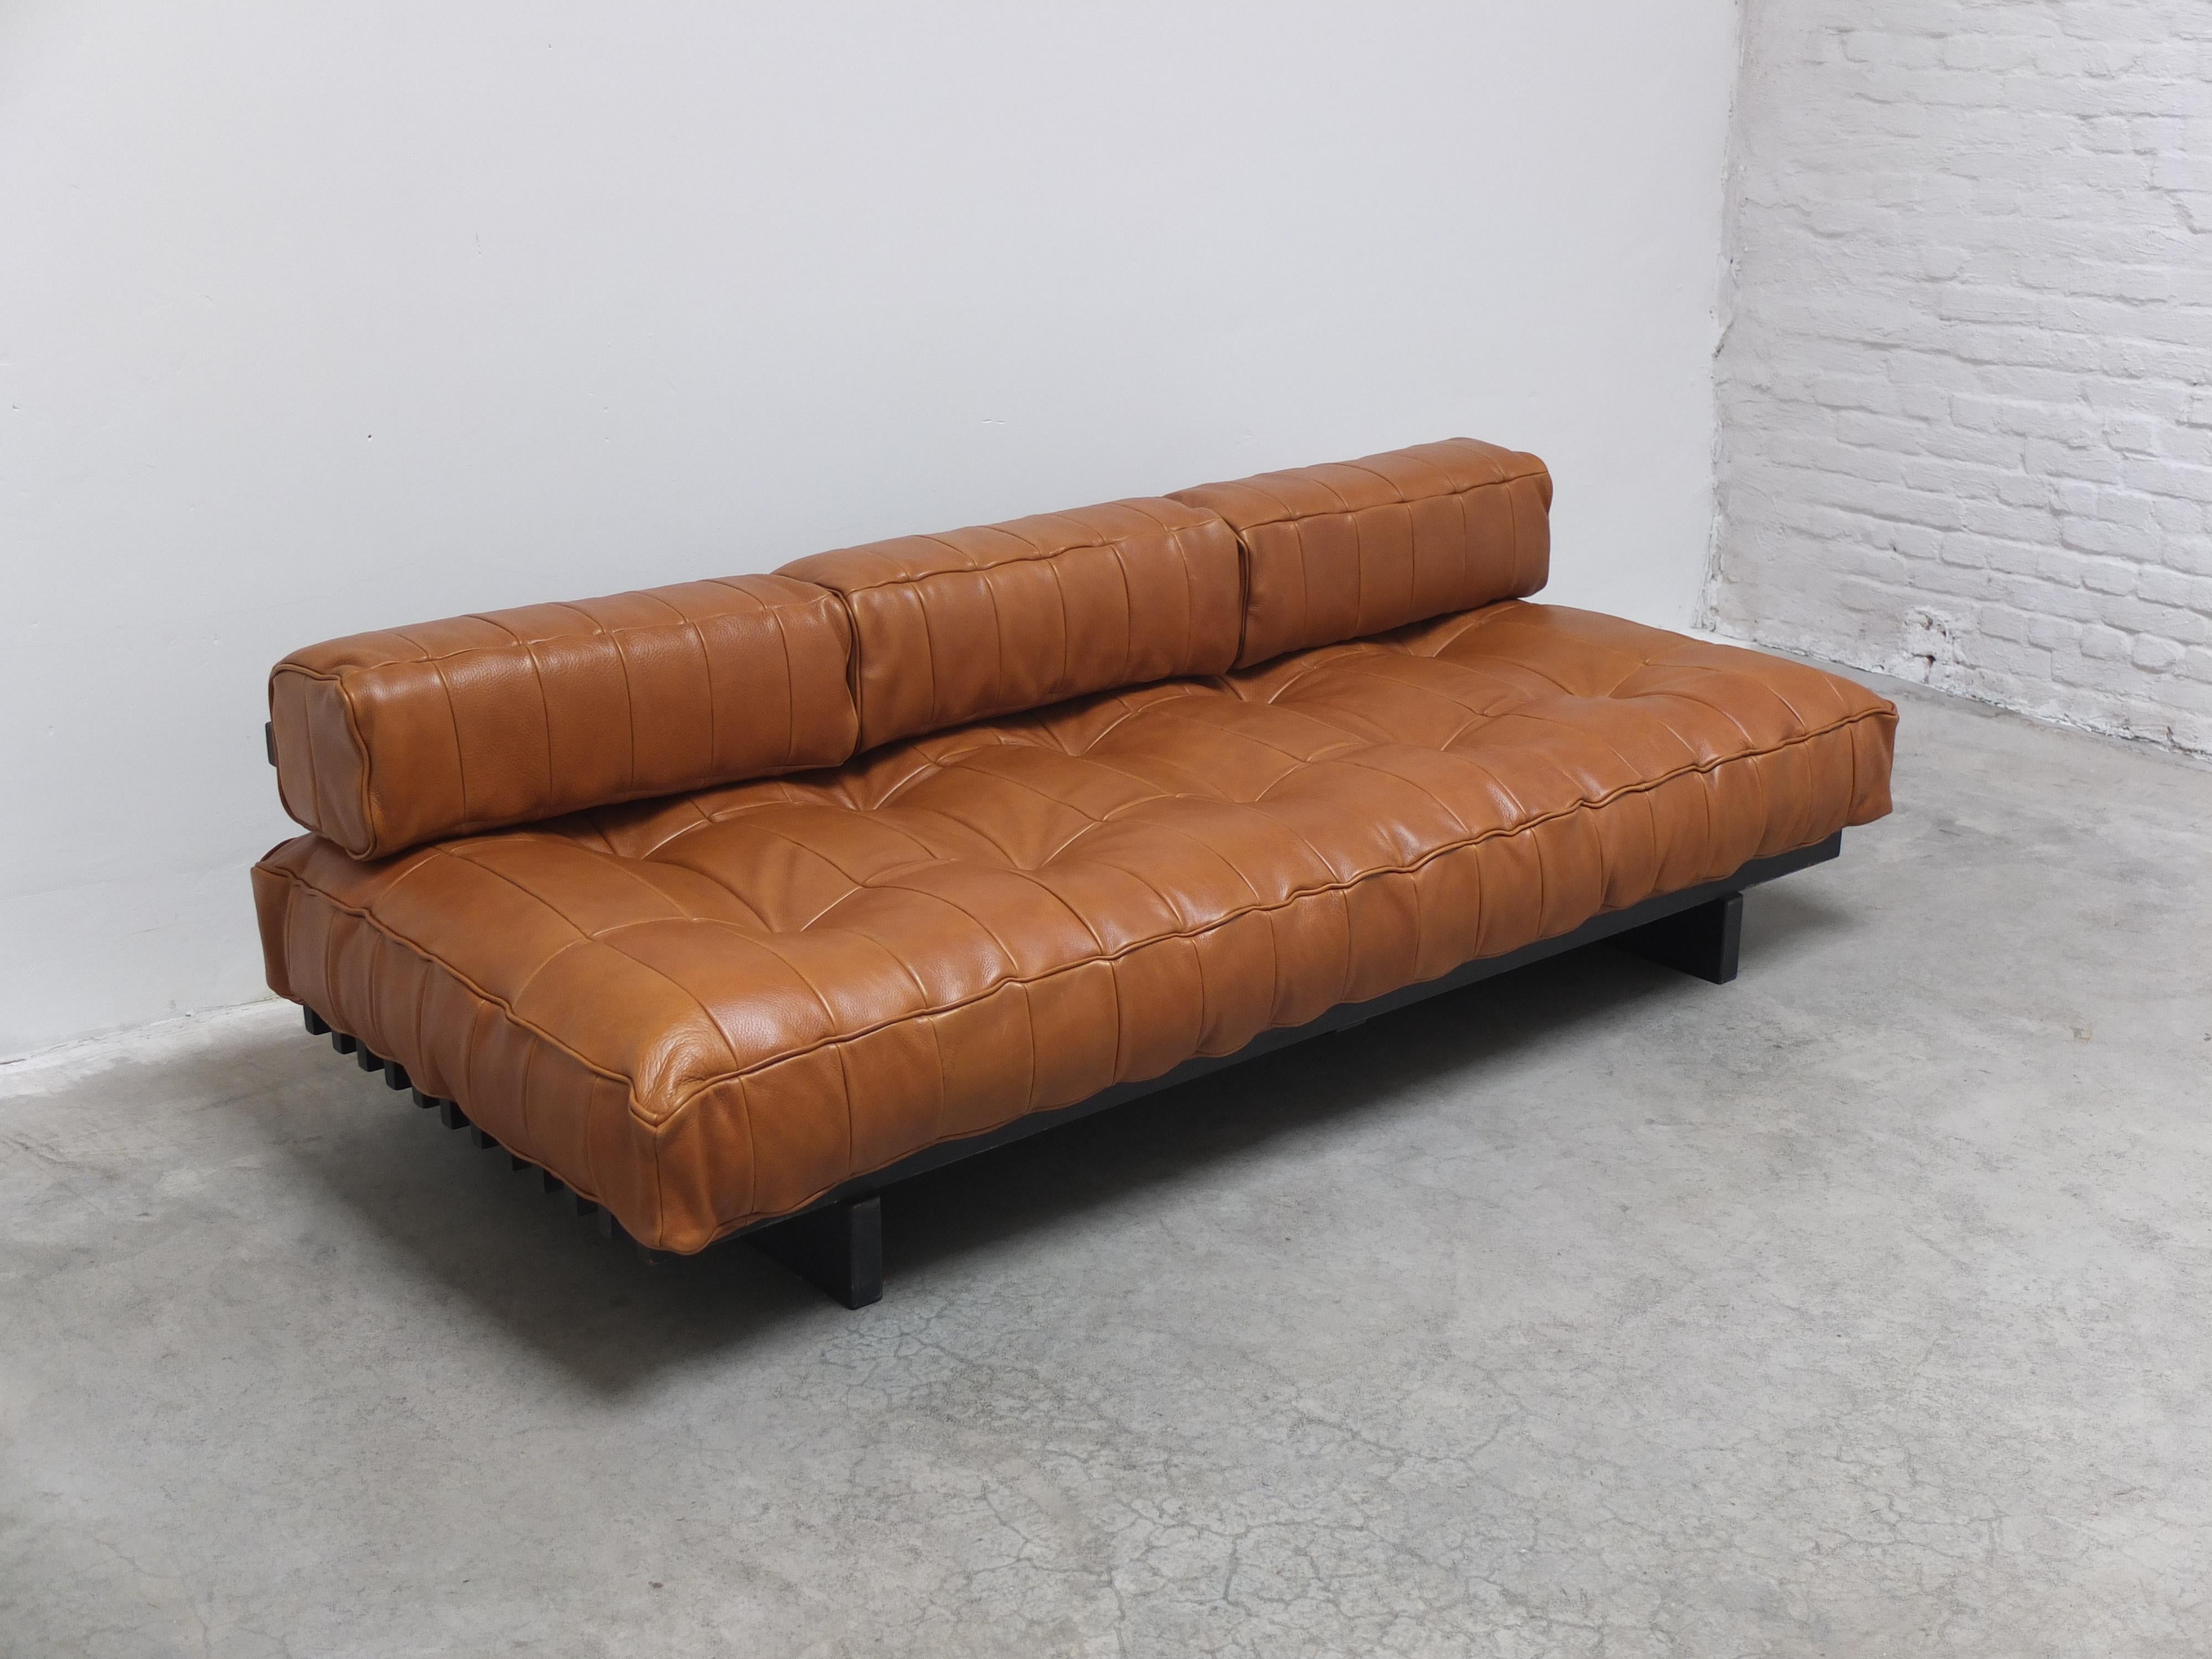 De Sede 'DS80' Patchwork-Leder-Sofa-Tagesbett mit passendem Hocker, 1970er Jahre (Moderne der Mitte des Jahrhunderts)